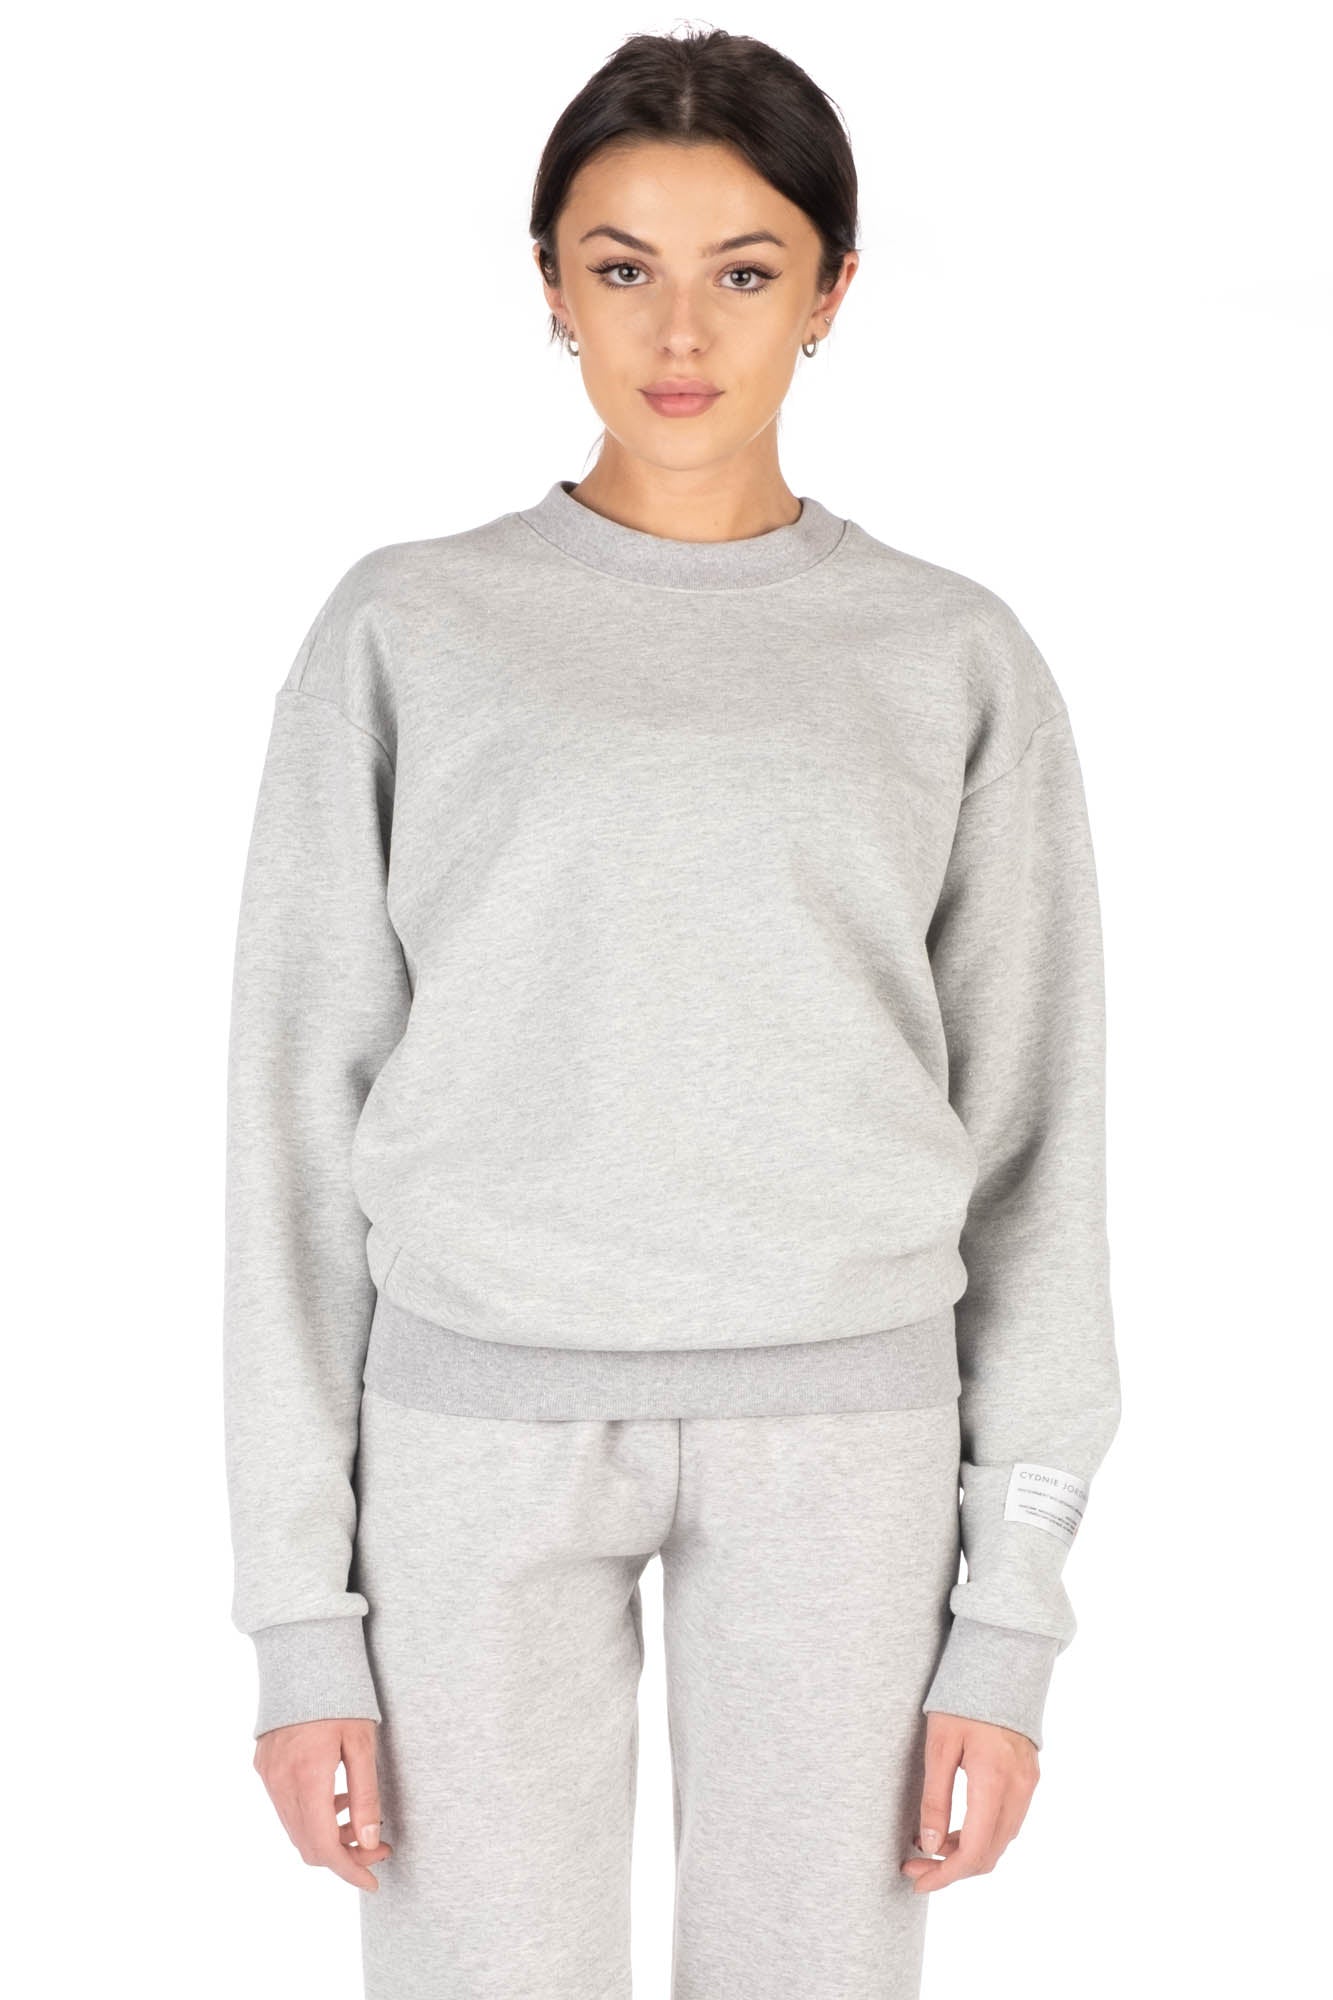 jordan grey sweatshirt